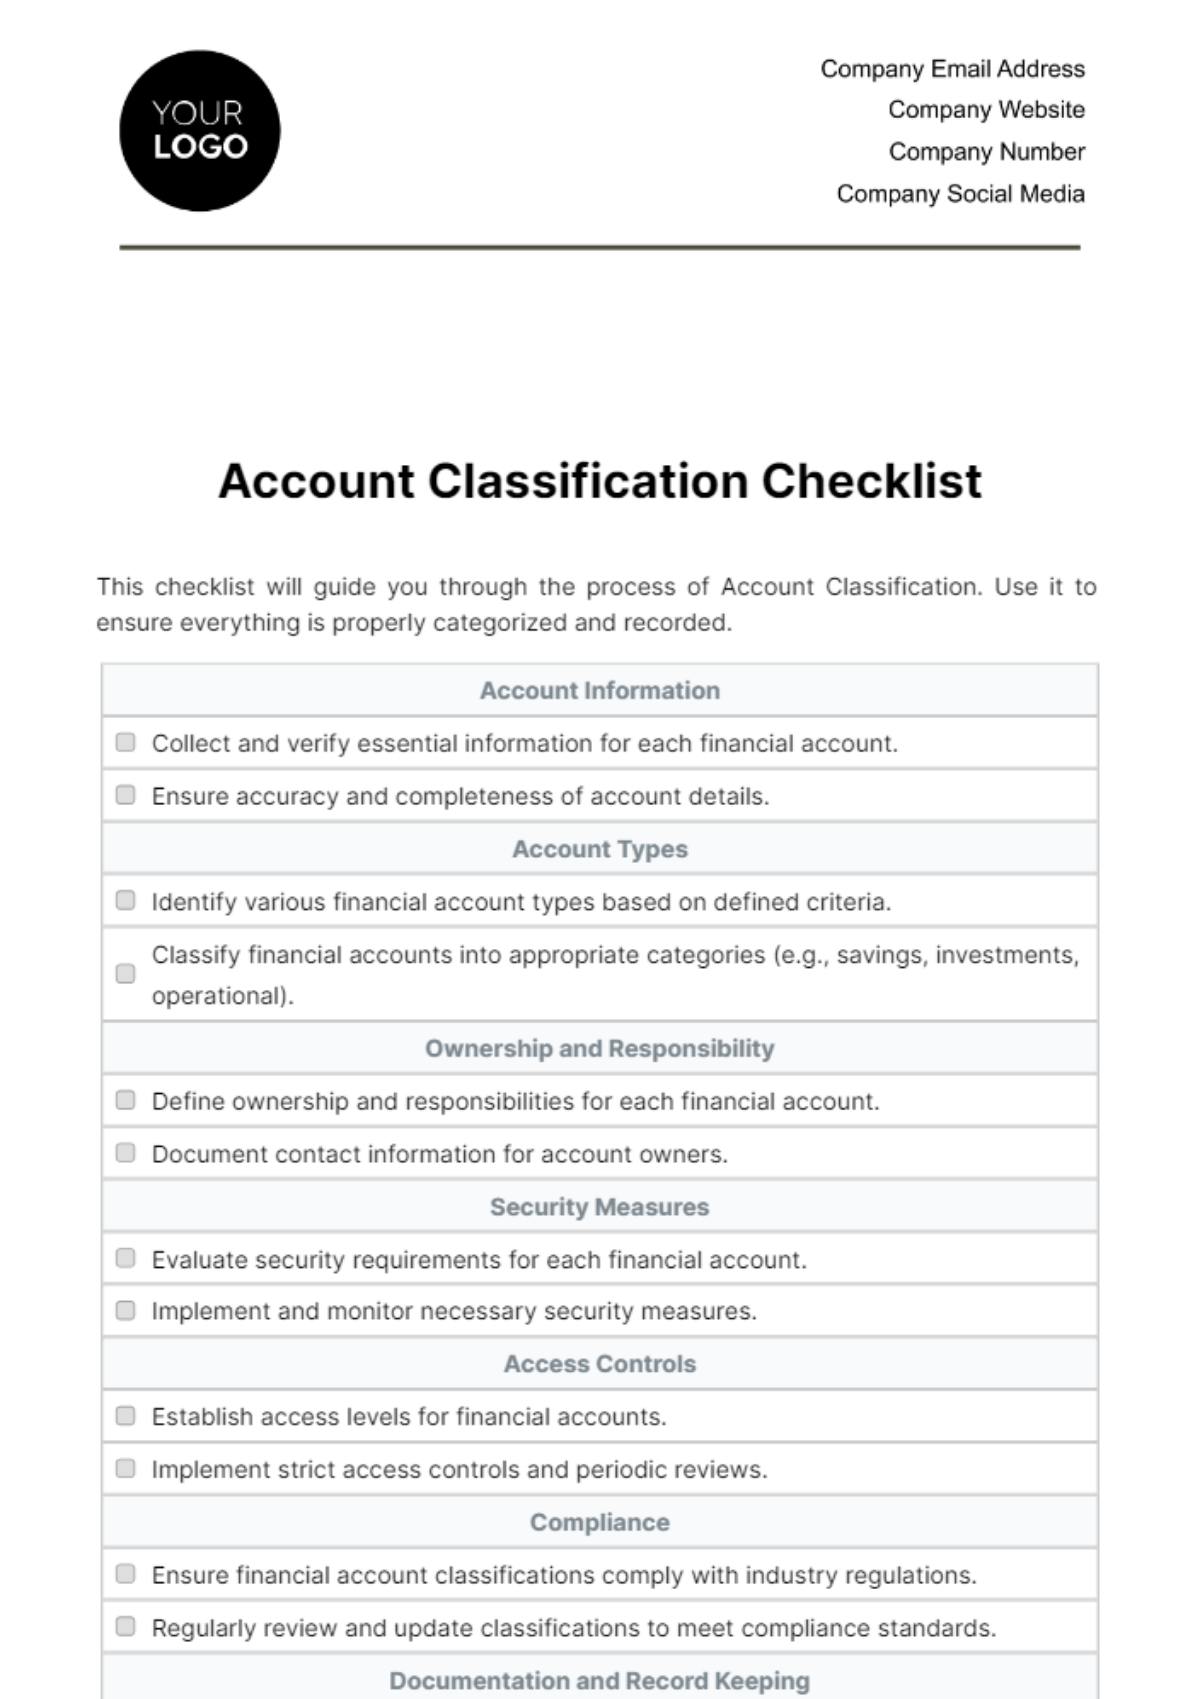 Account Classification Checklist Template